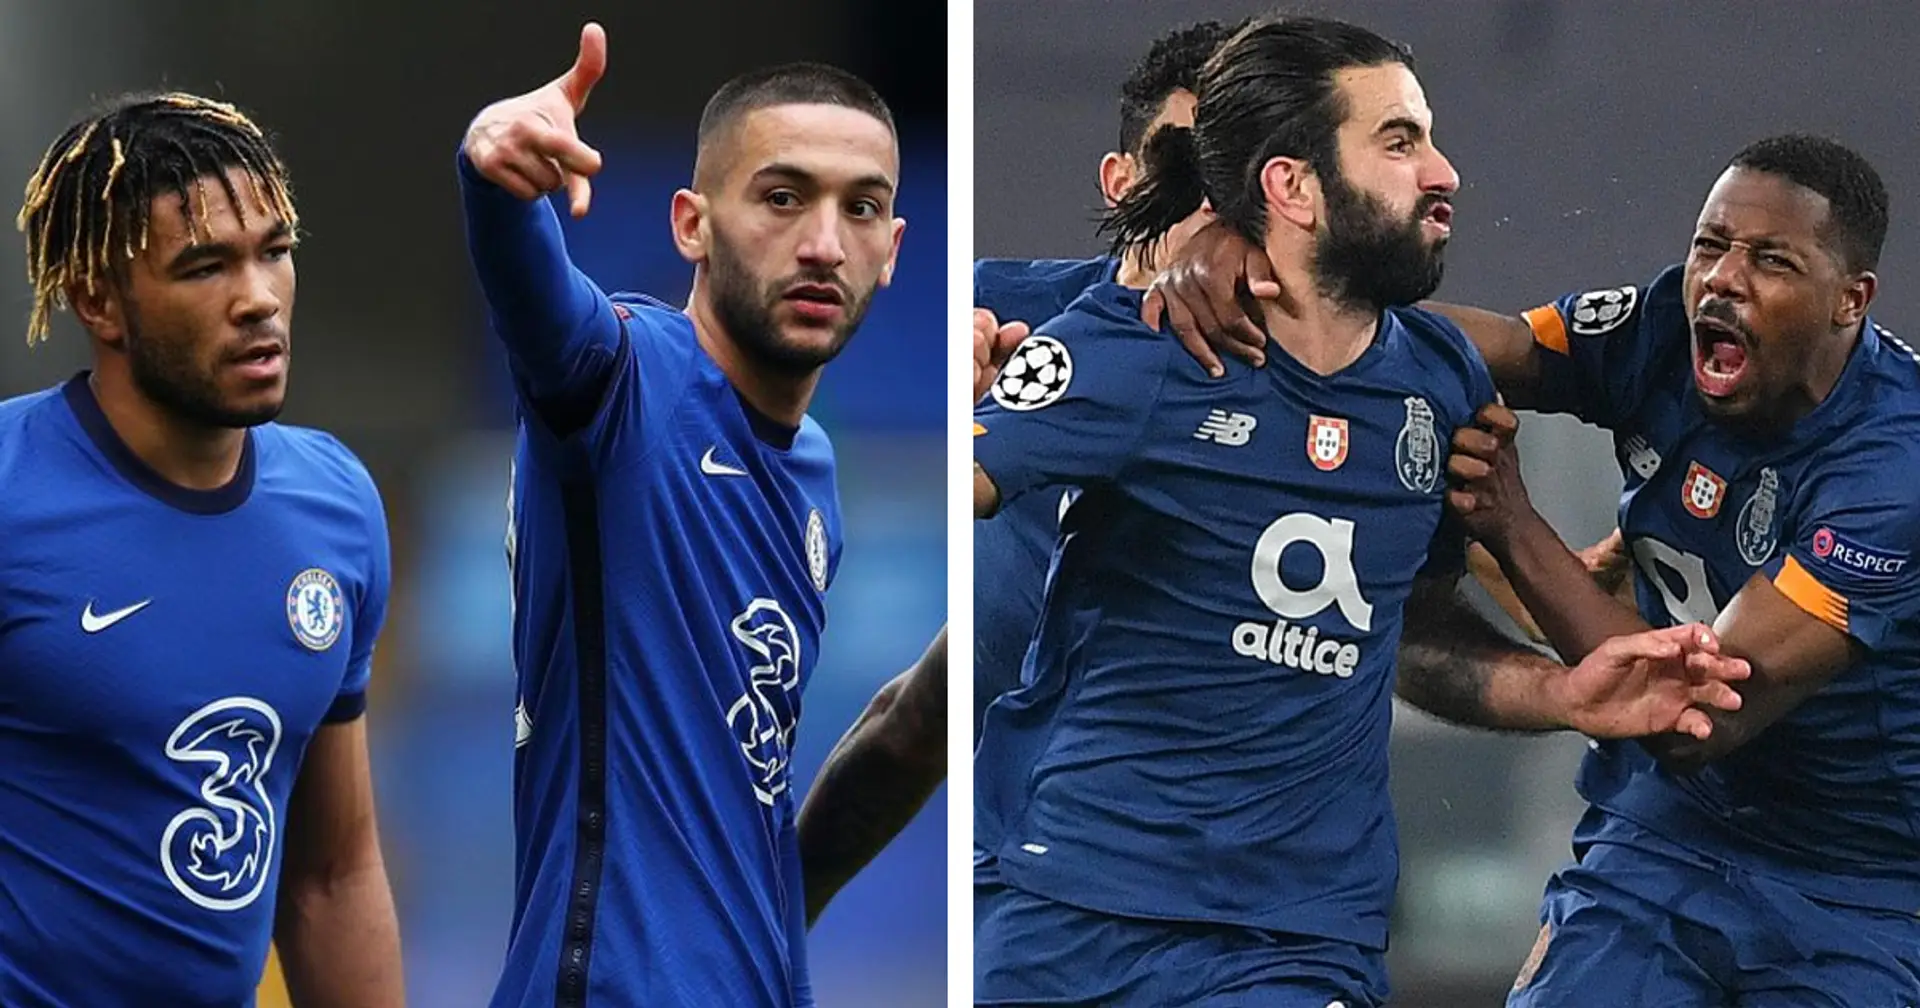 Porto vs Chelsea: Team news, probable line-ups, score predictions, and more - preview